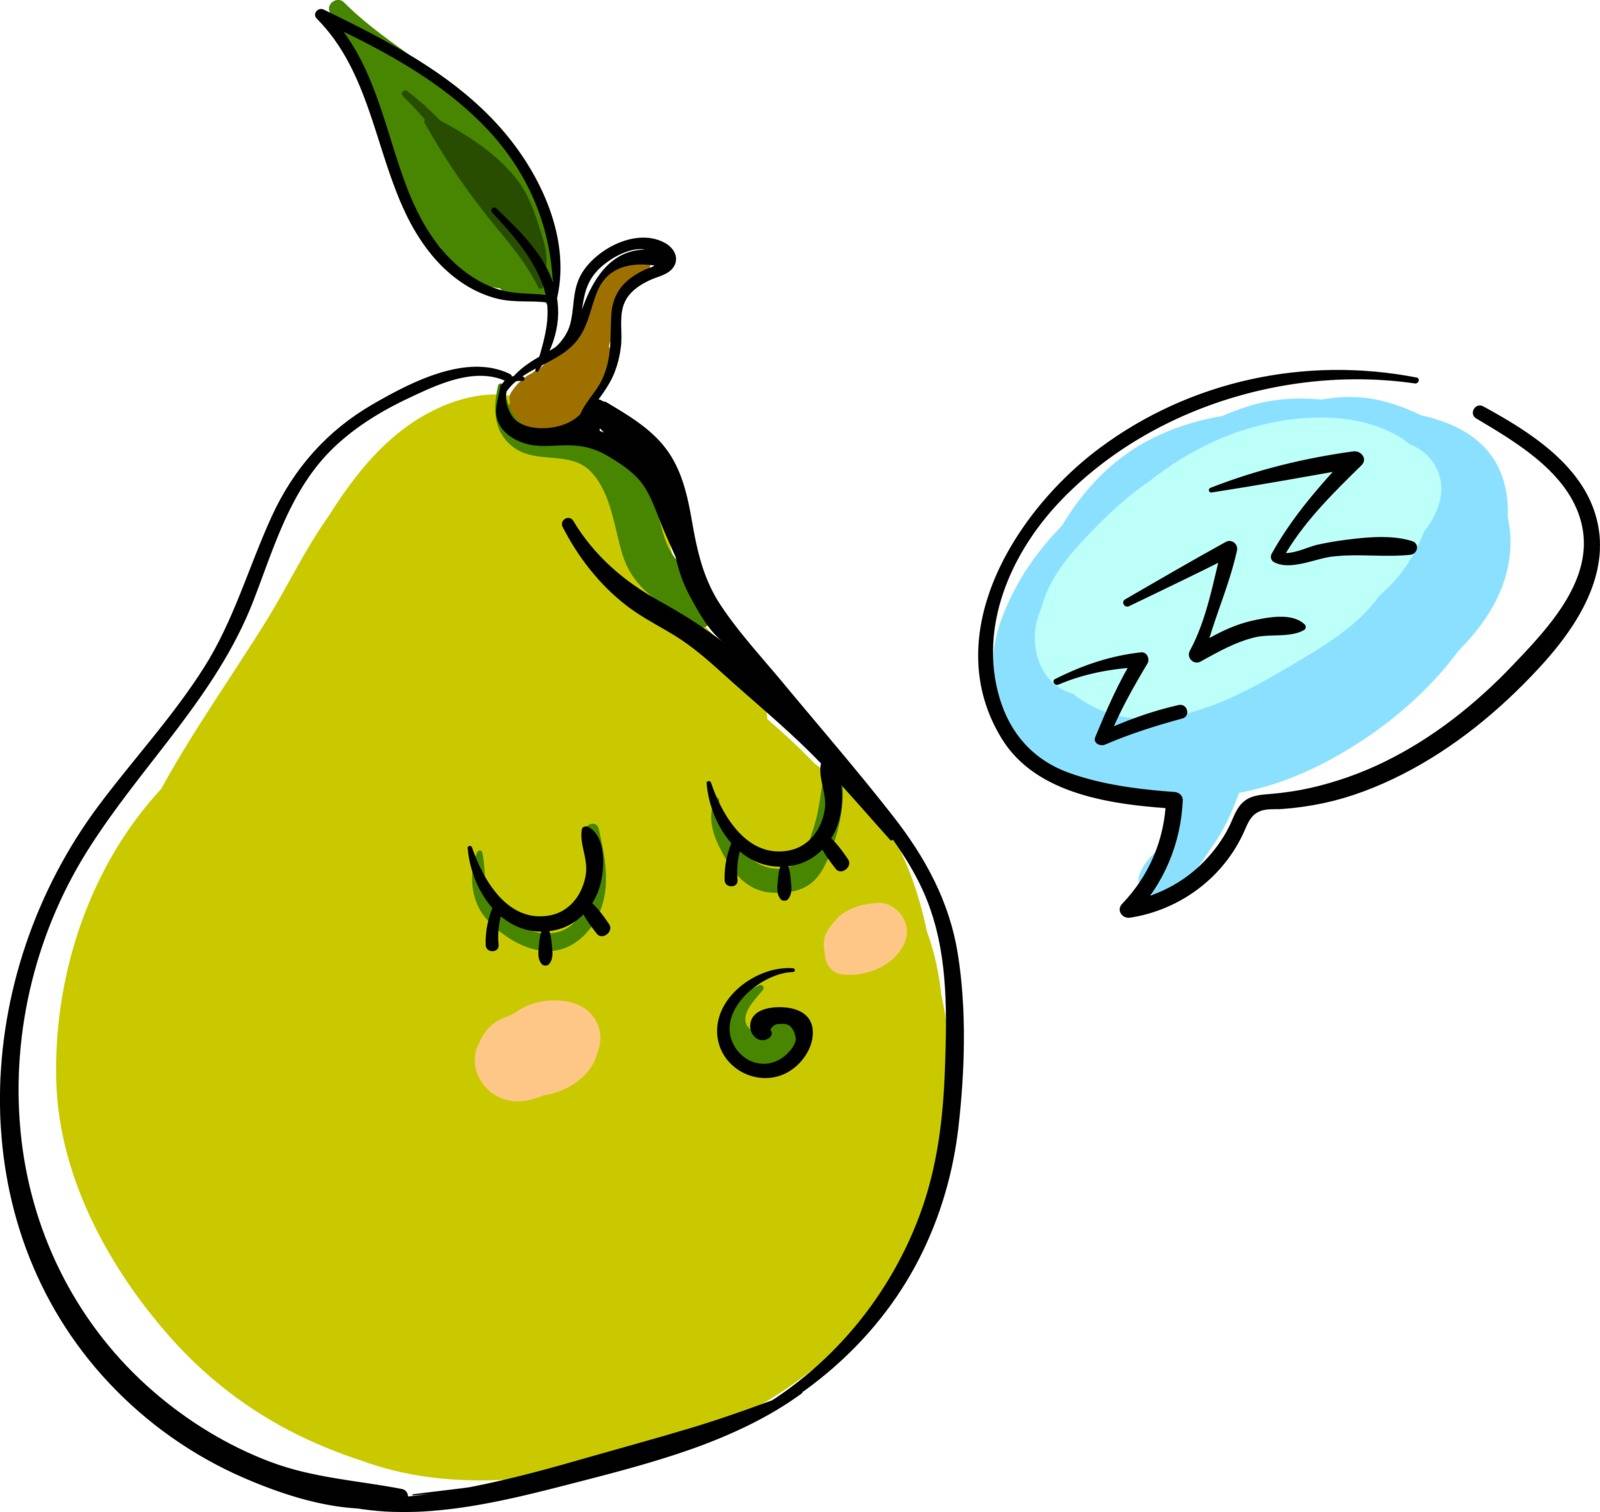 Guava sleeping, illustration, vector on white background.